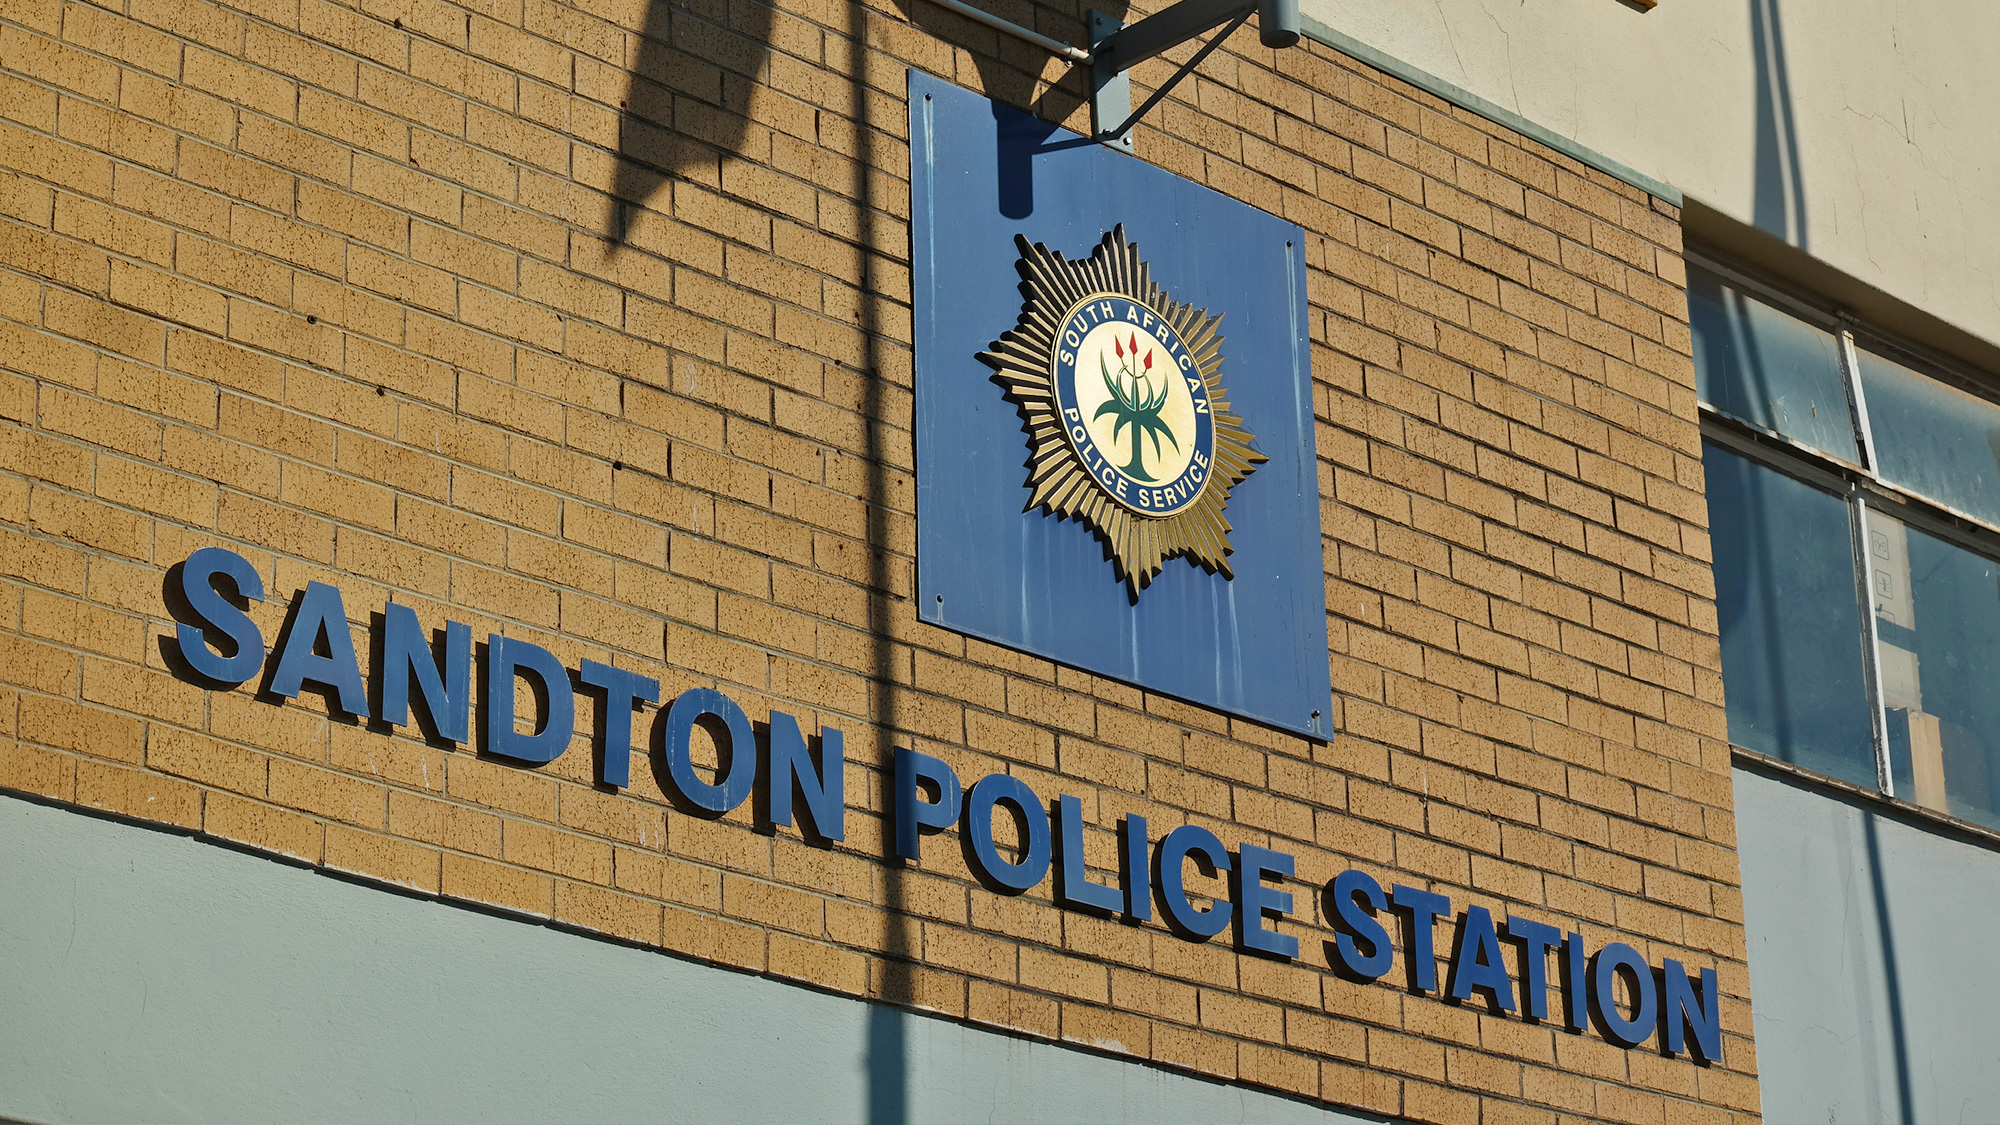 sandton-saps-police-station-001-[2000x1125]